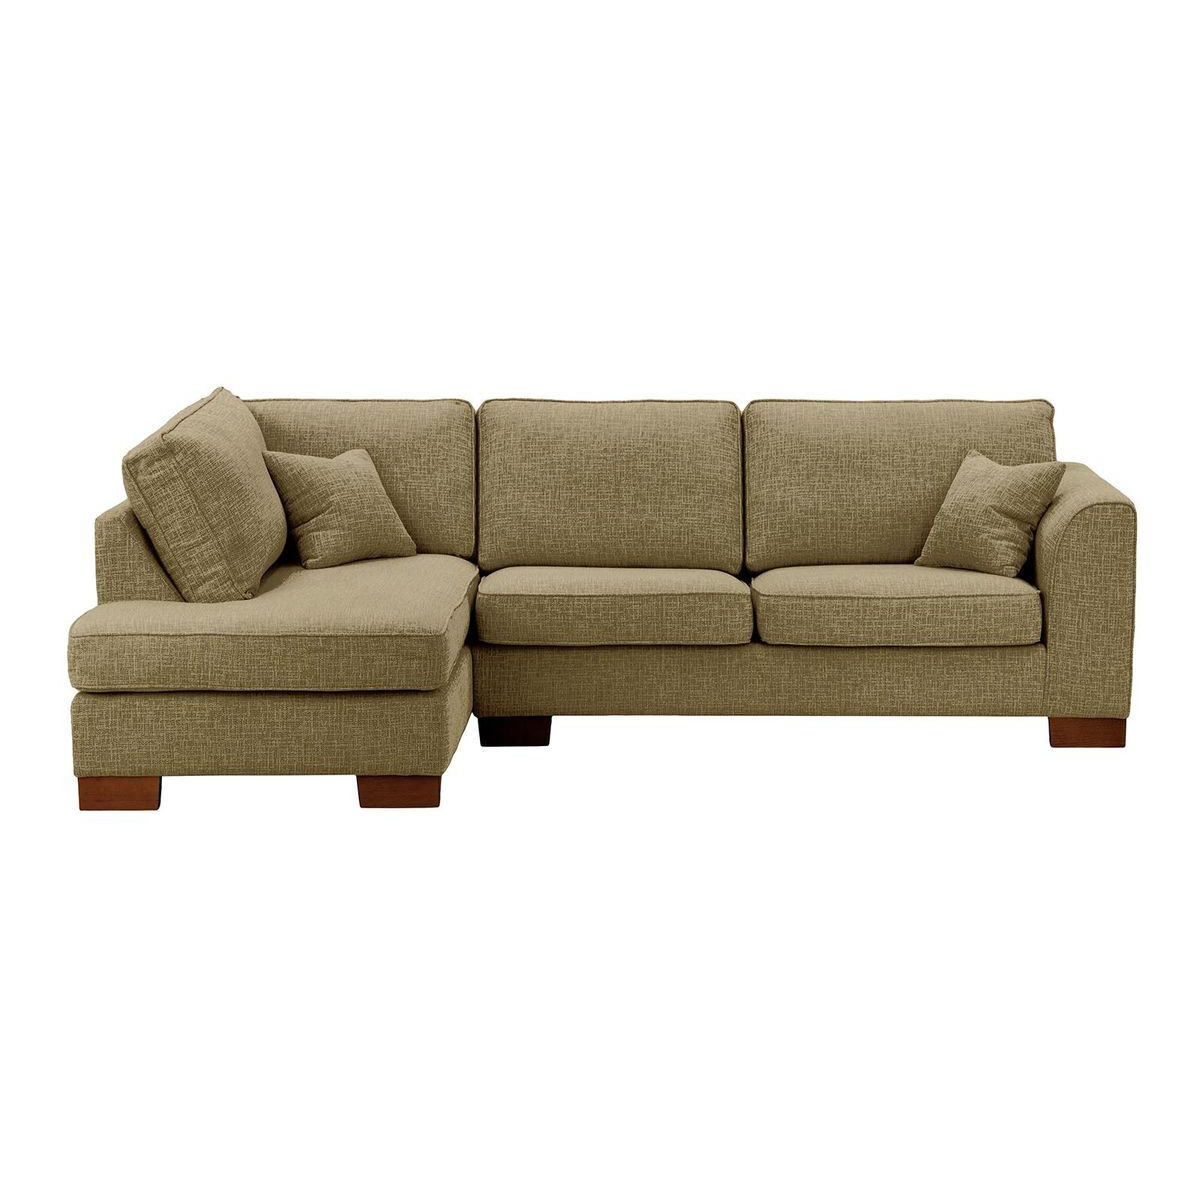 Avos Left Hand Corner Sofa Bed, brown, Leg colour: dark oak - image 1